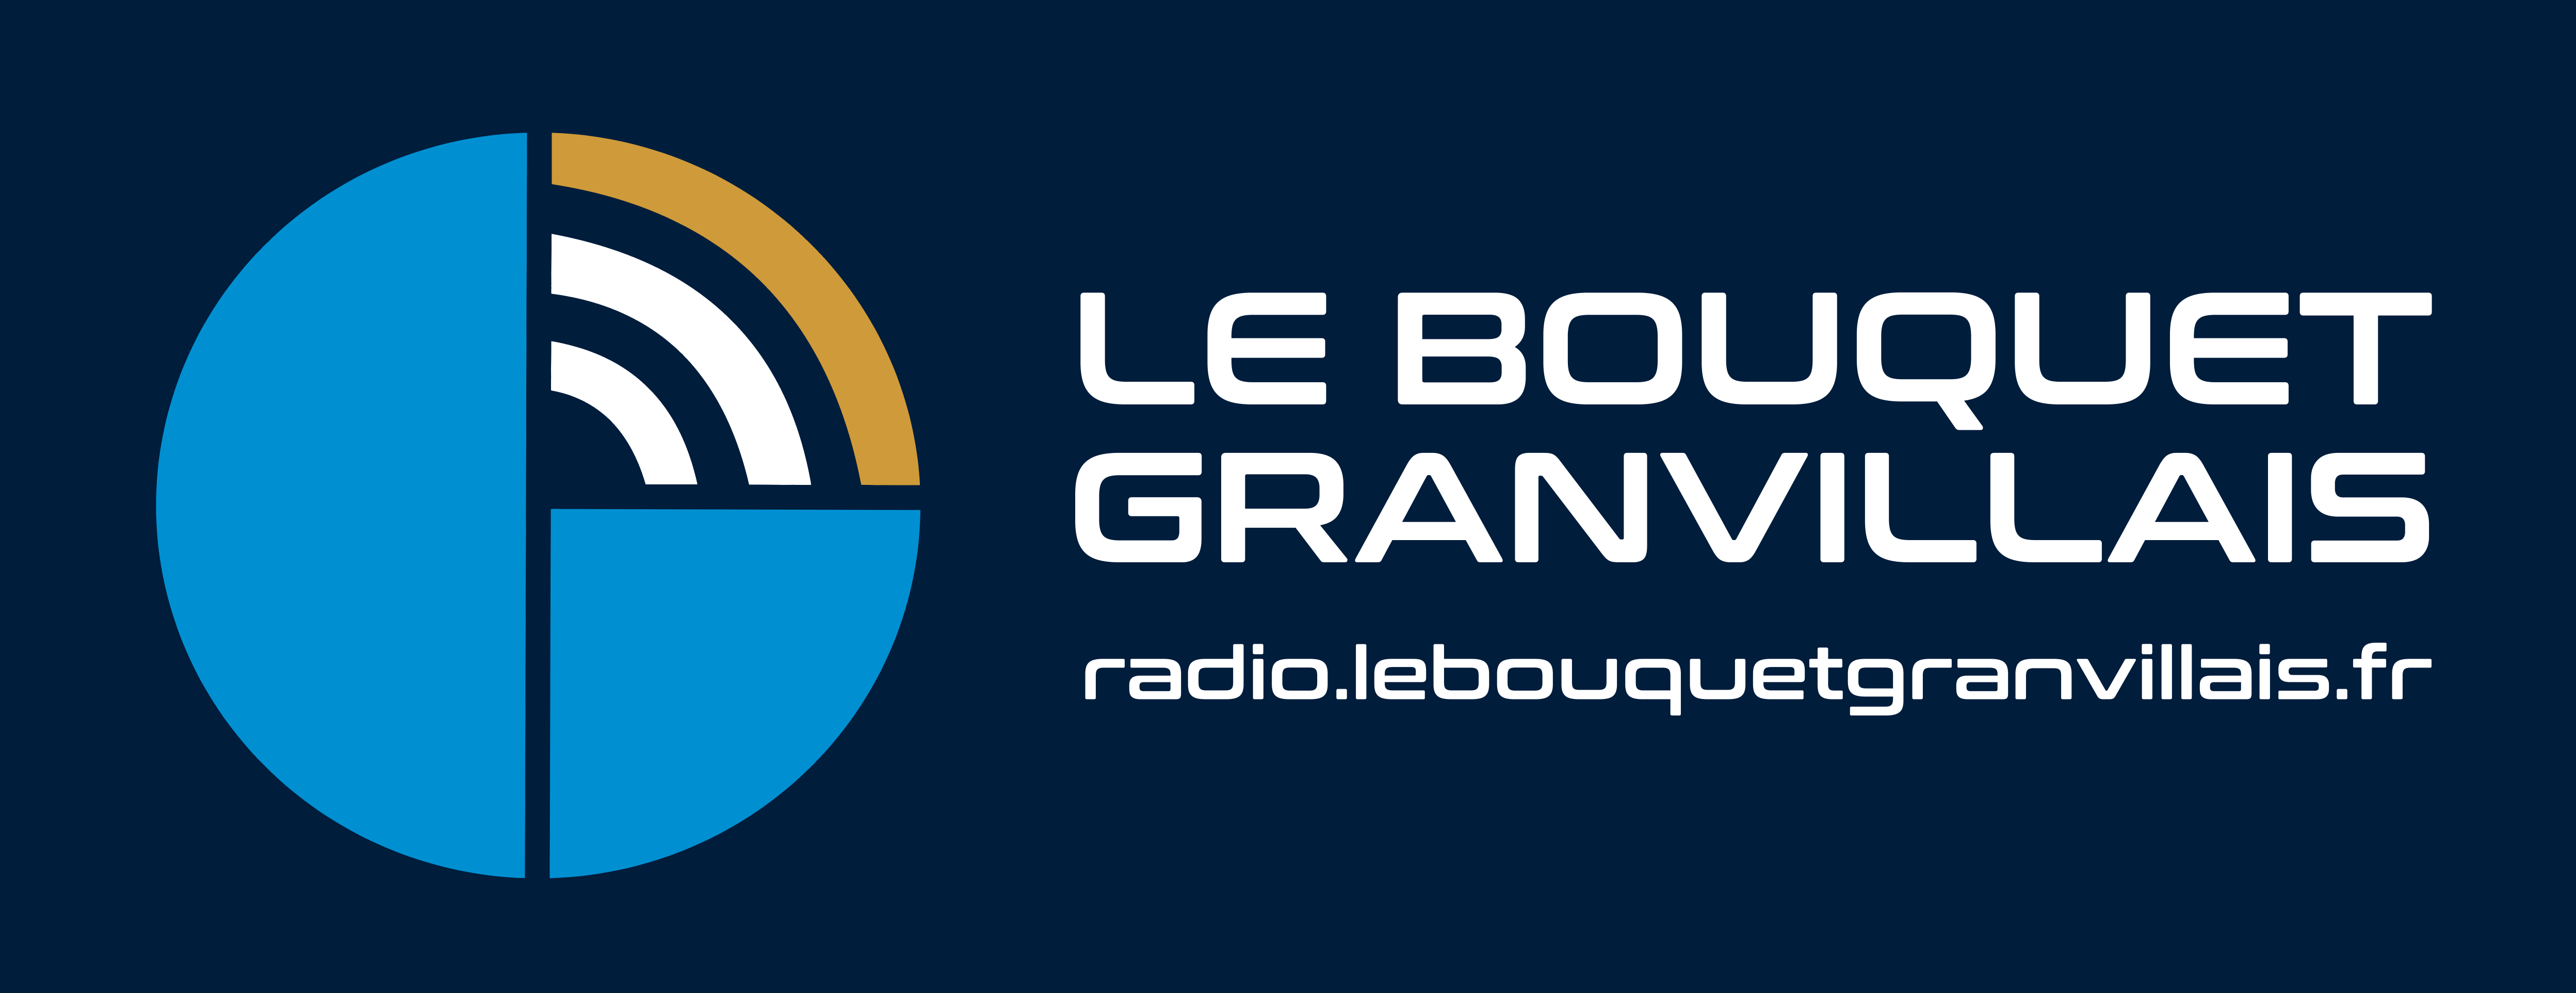 RADIO Bouquet Granvillais 